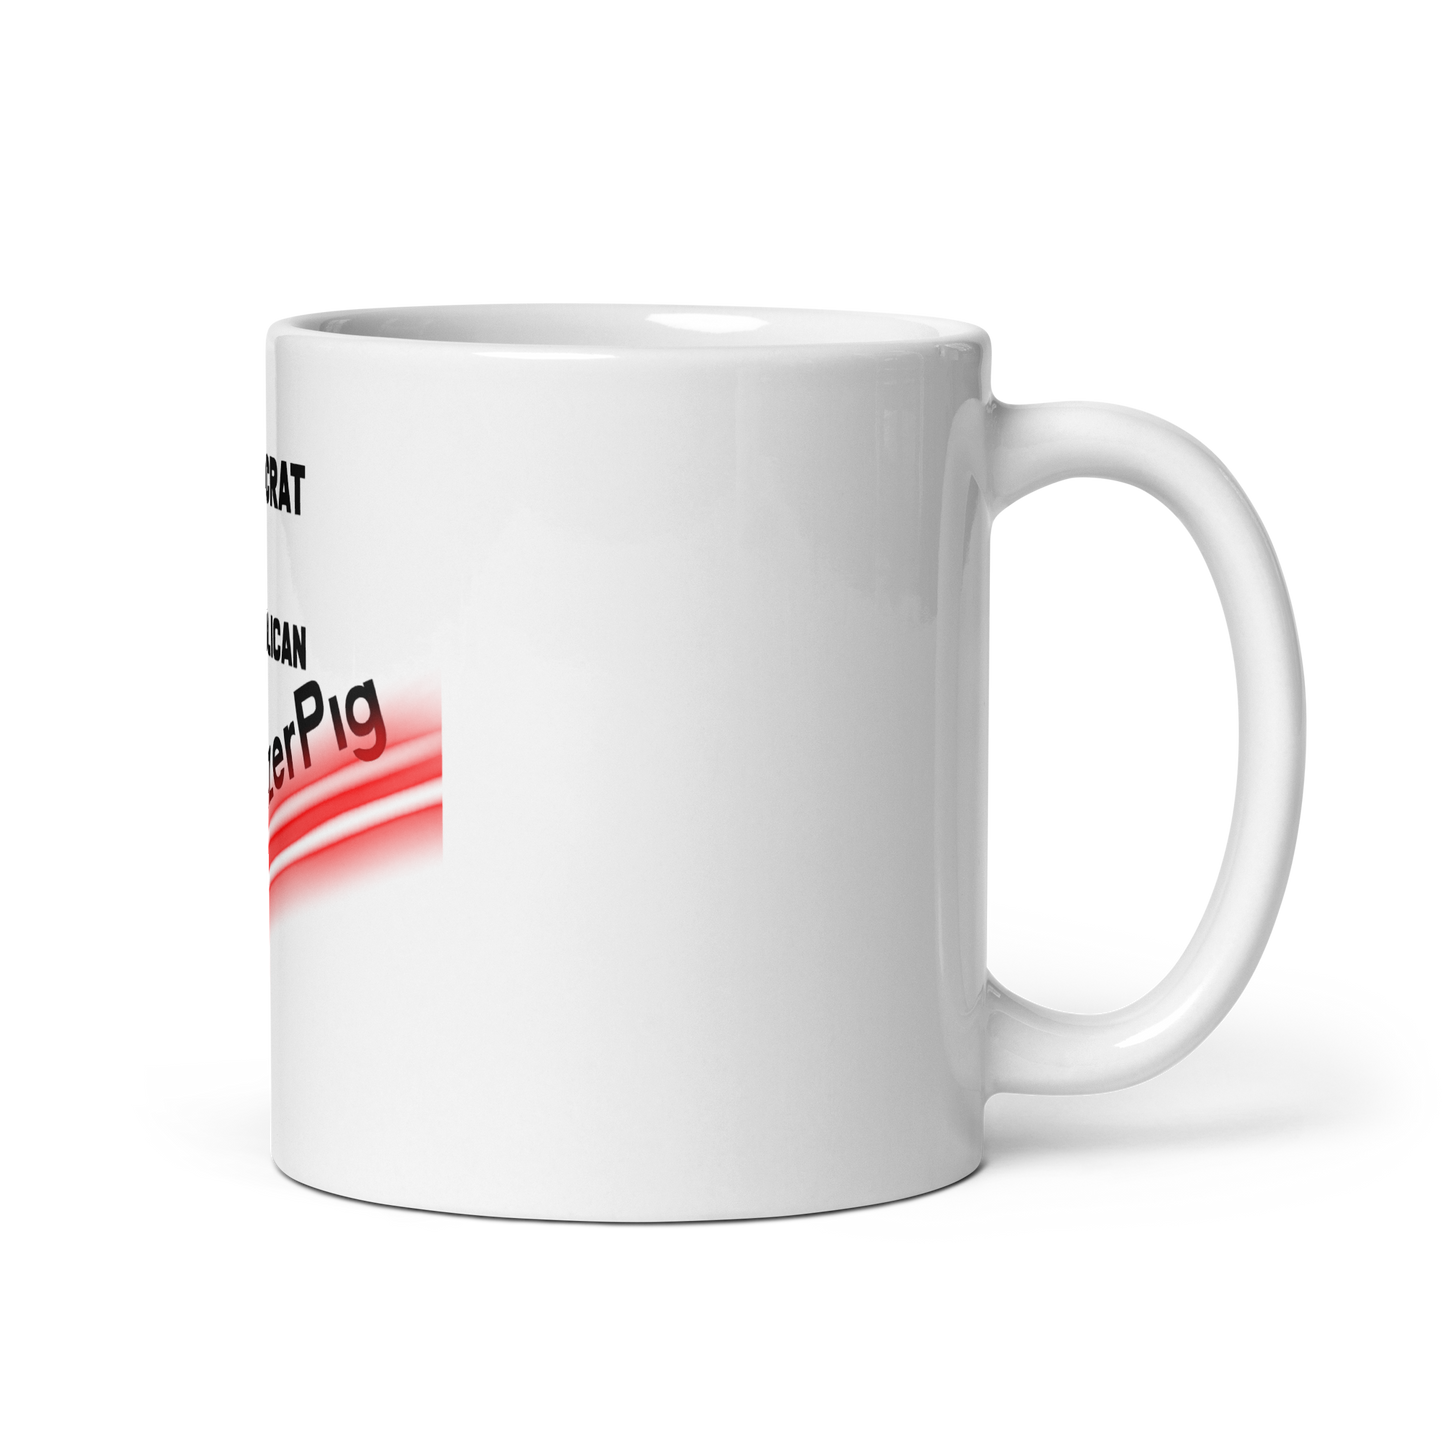 Vote LazerPig White Mug (Worldwide)